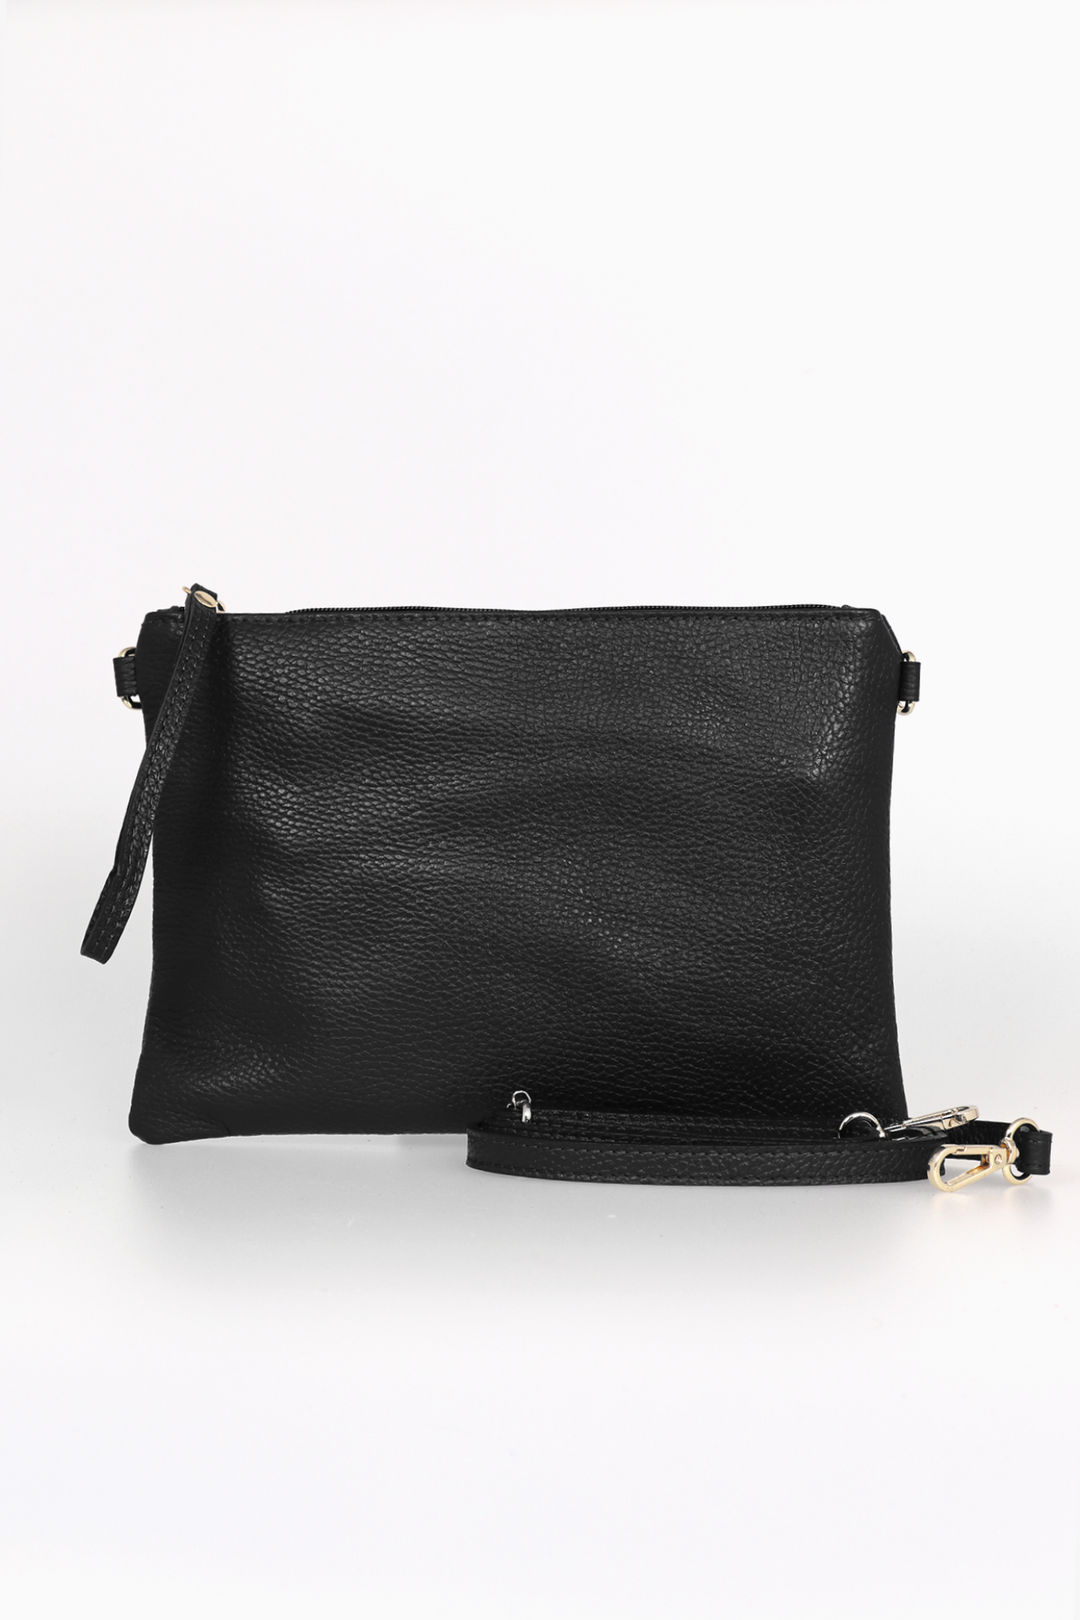 Black Genuine Italian Leather Large Wristlet Clutch Bag